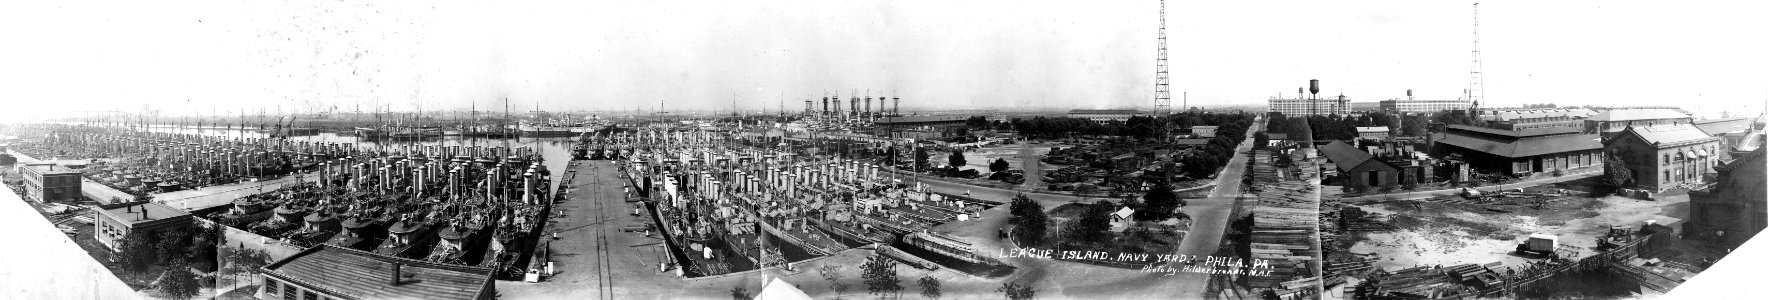 Destroyers laid up at the Philadelphia Naval Shipyard, Pennsylvania (USA), circa 1920-1921 (S-574-M) photo